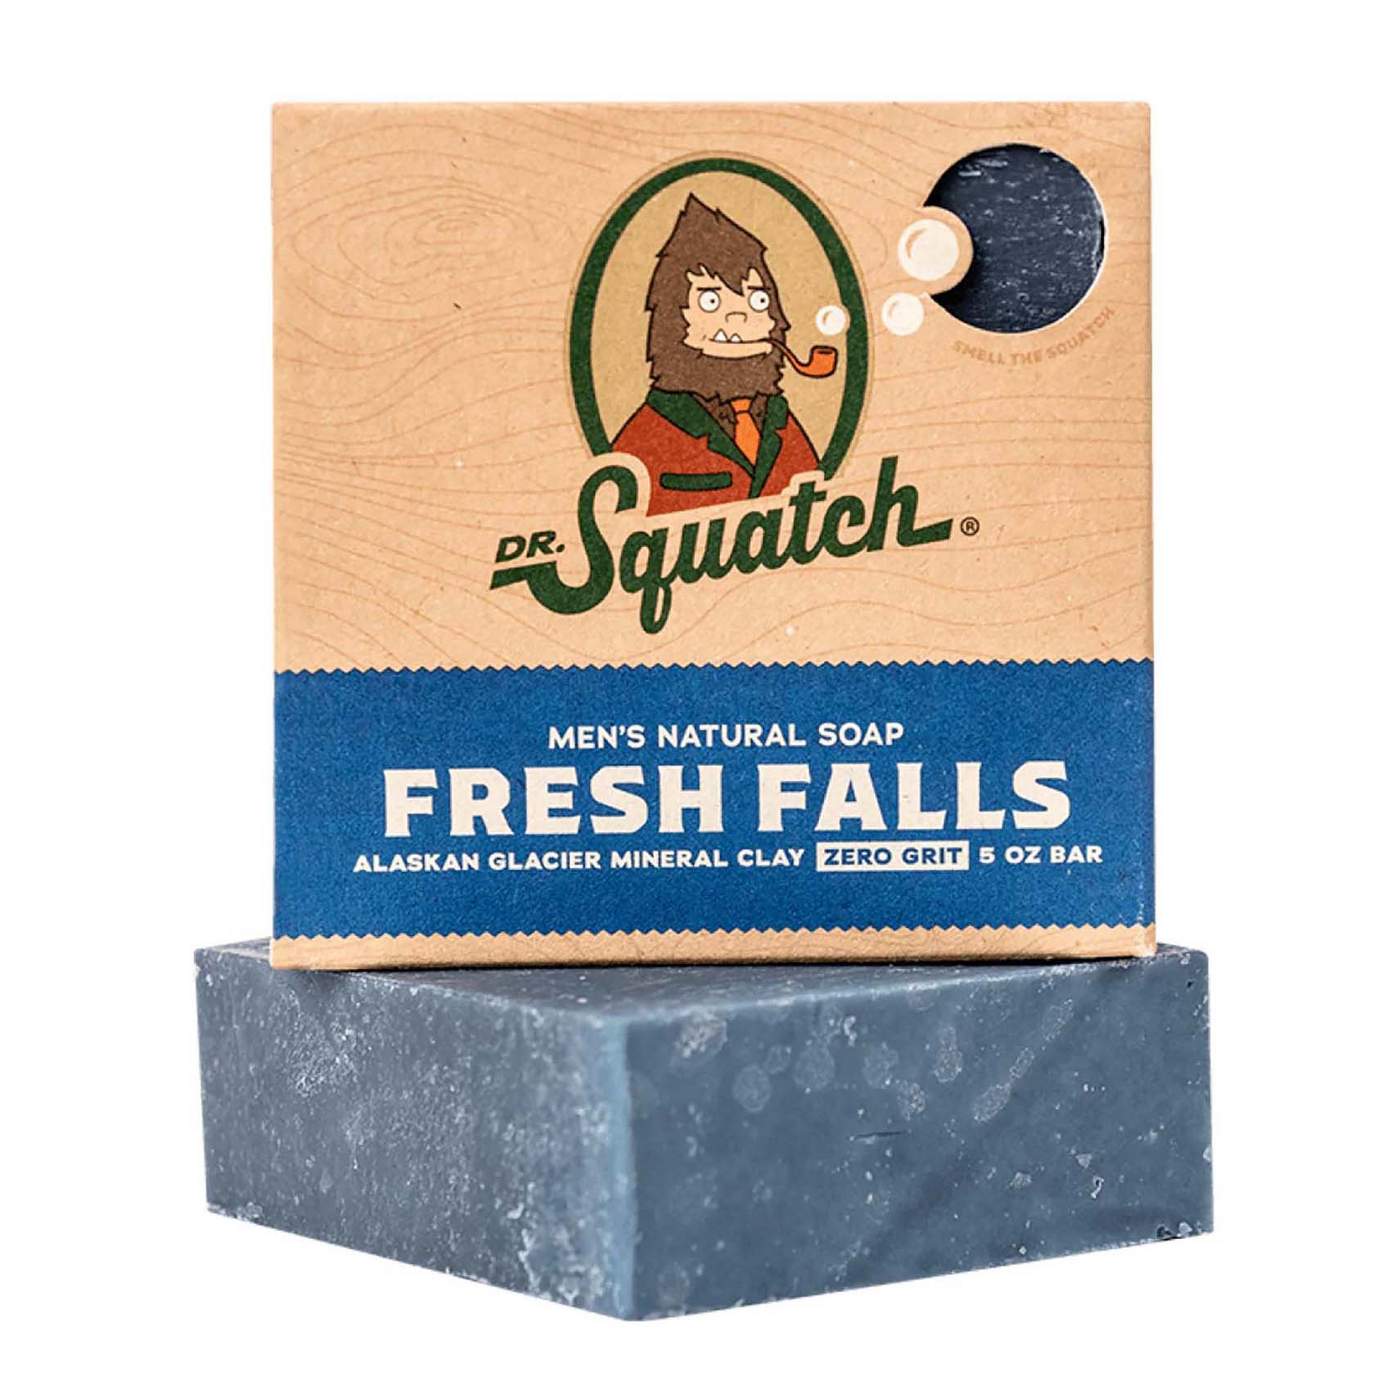 Dr. Squatch Men's Natural Soap Bar - Fresh Falls; image 3 of 5